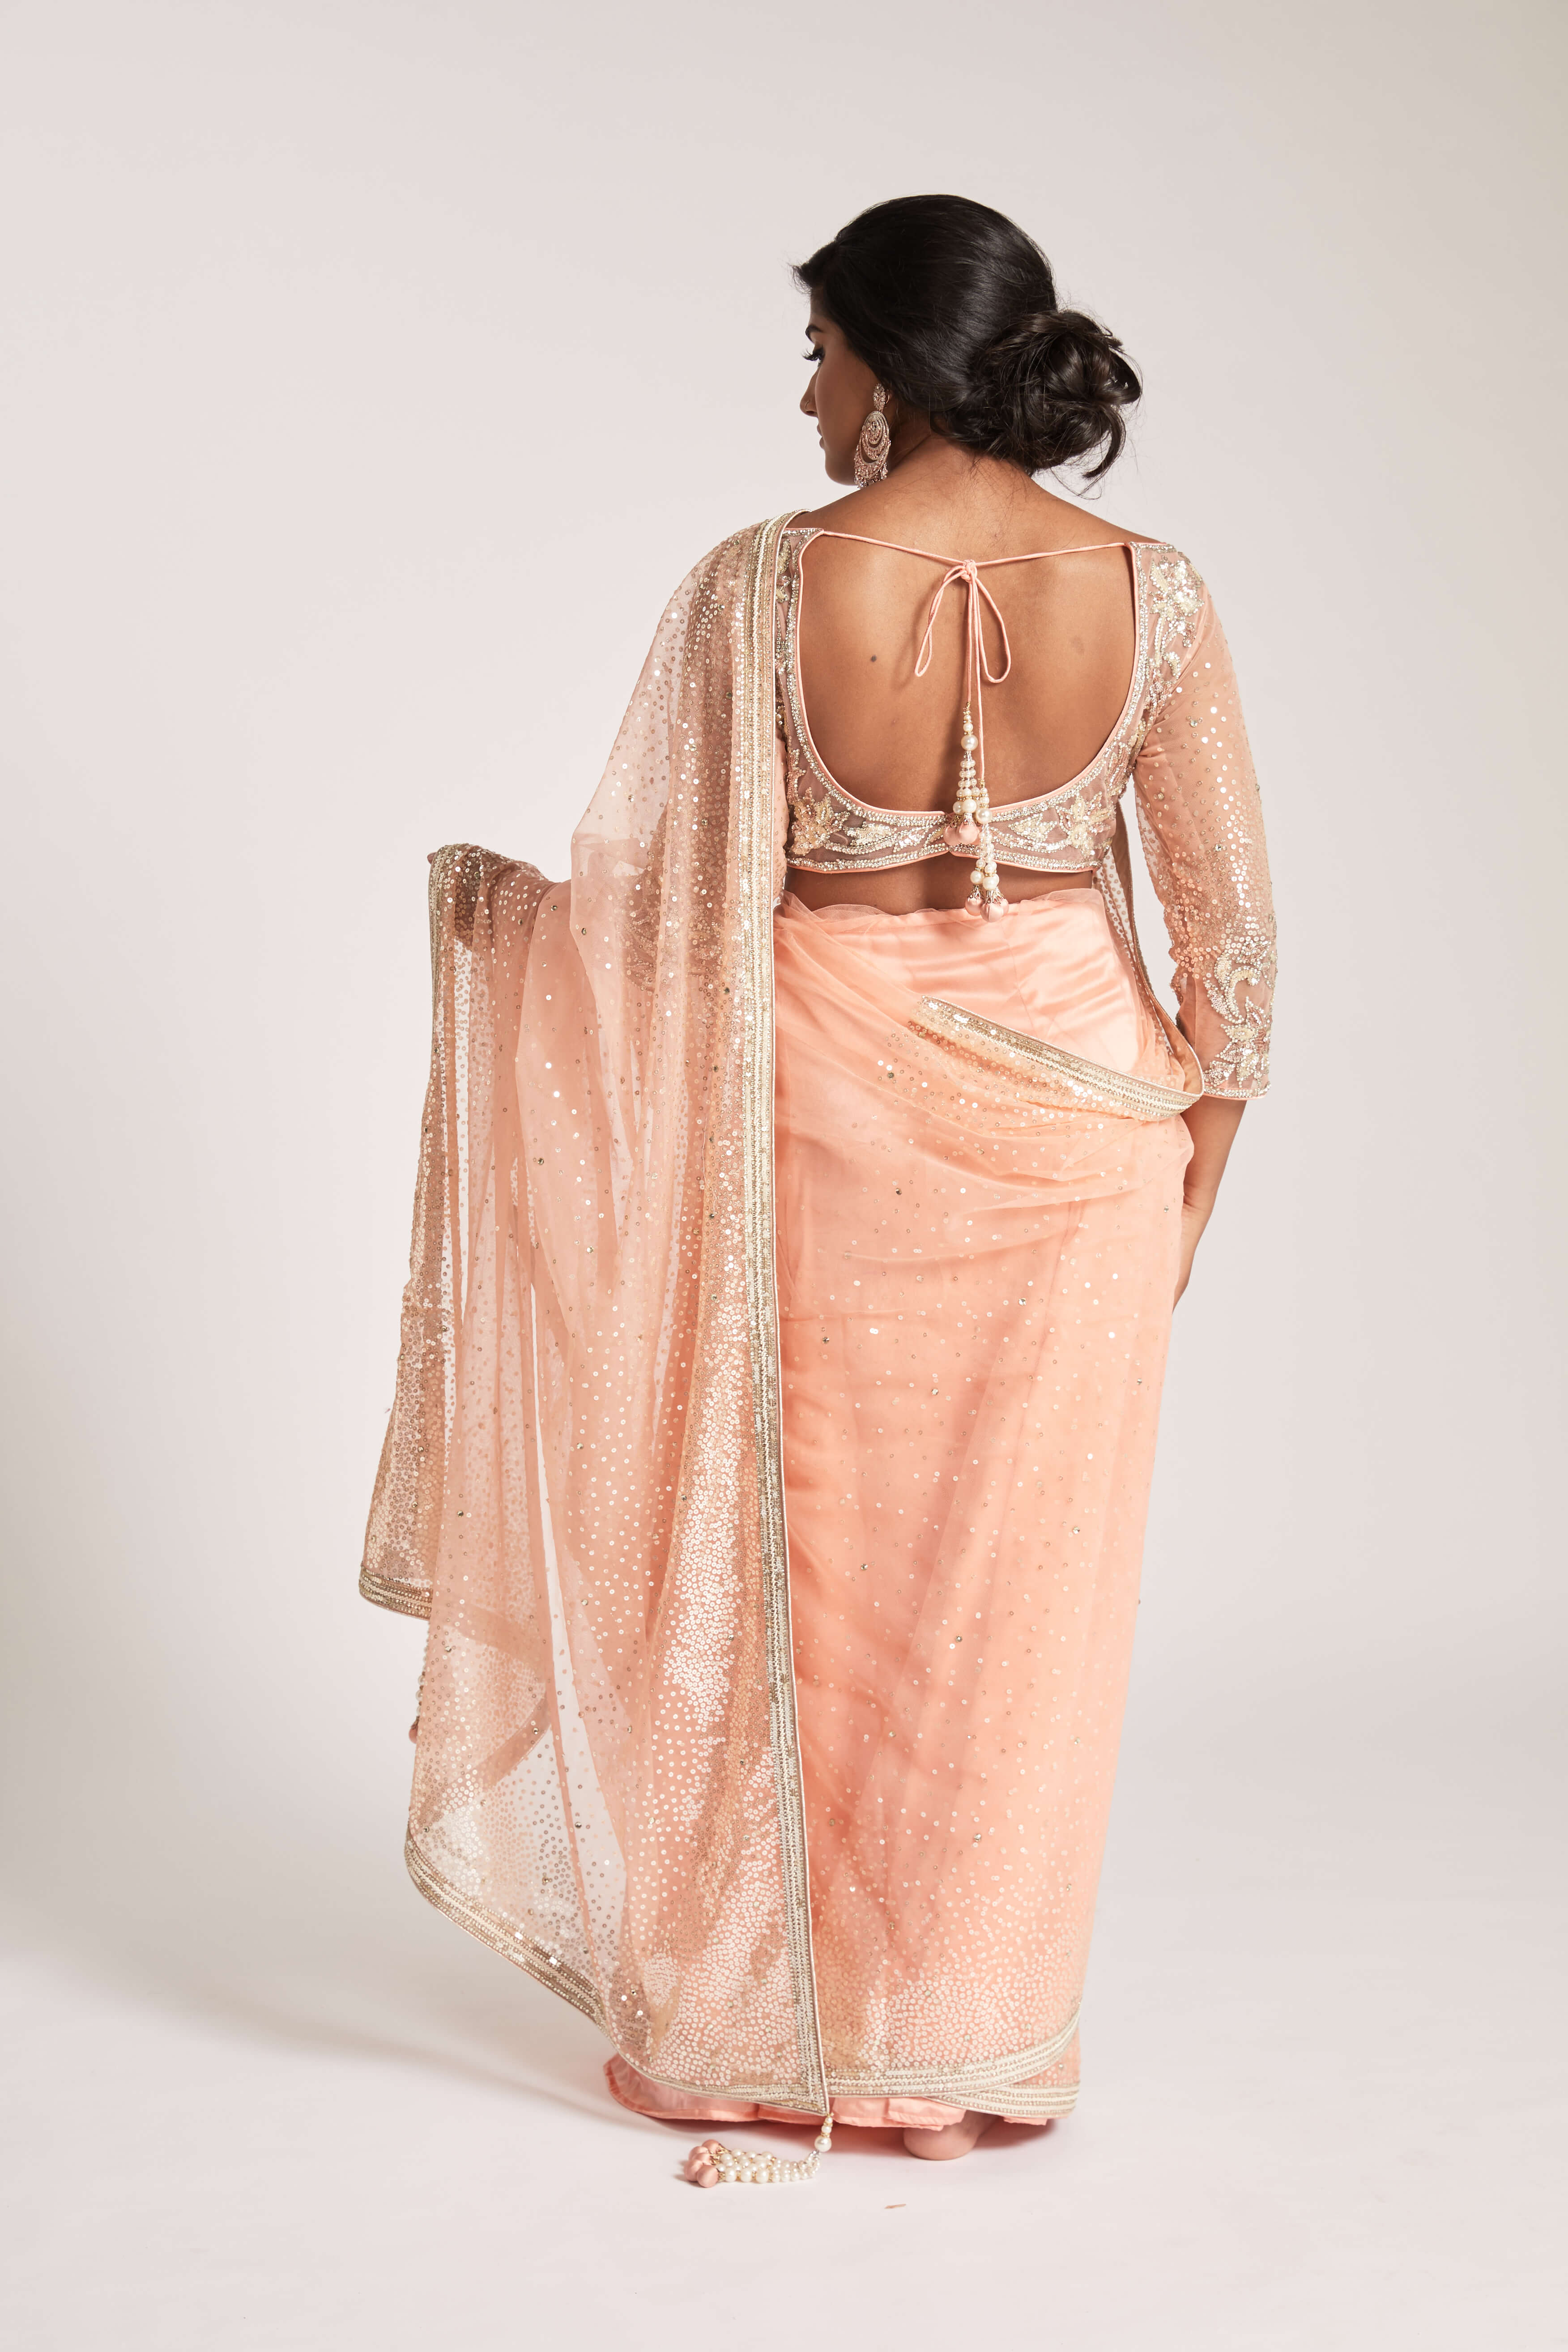 Net Silver Zari Embroidered Saree in Peach - KARMAPLACE.COM